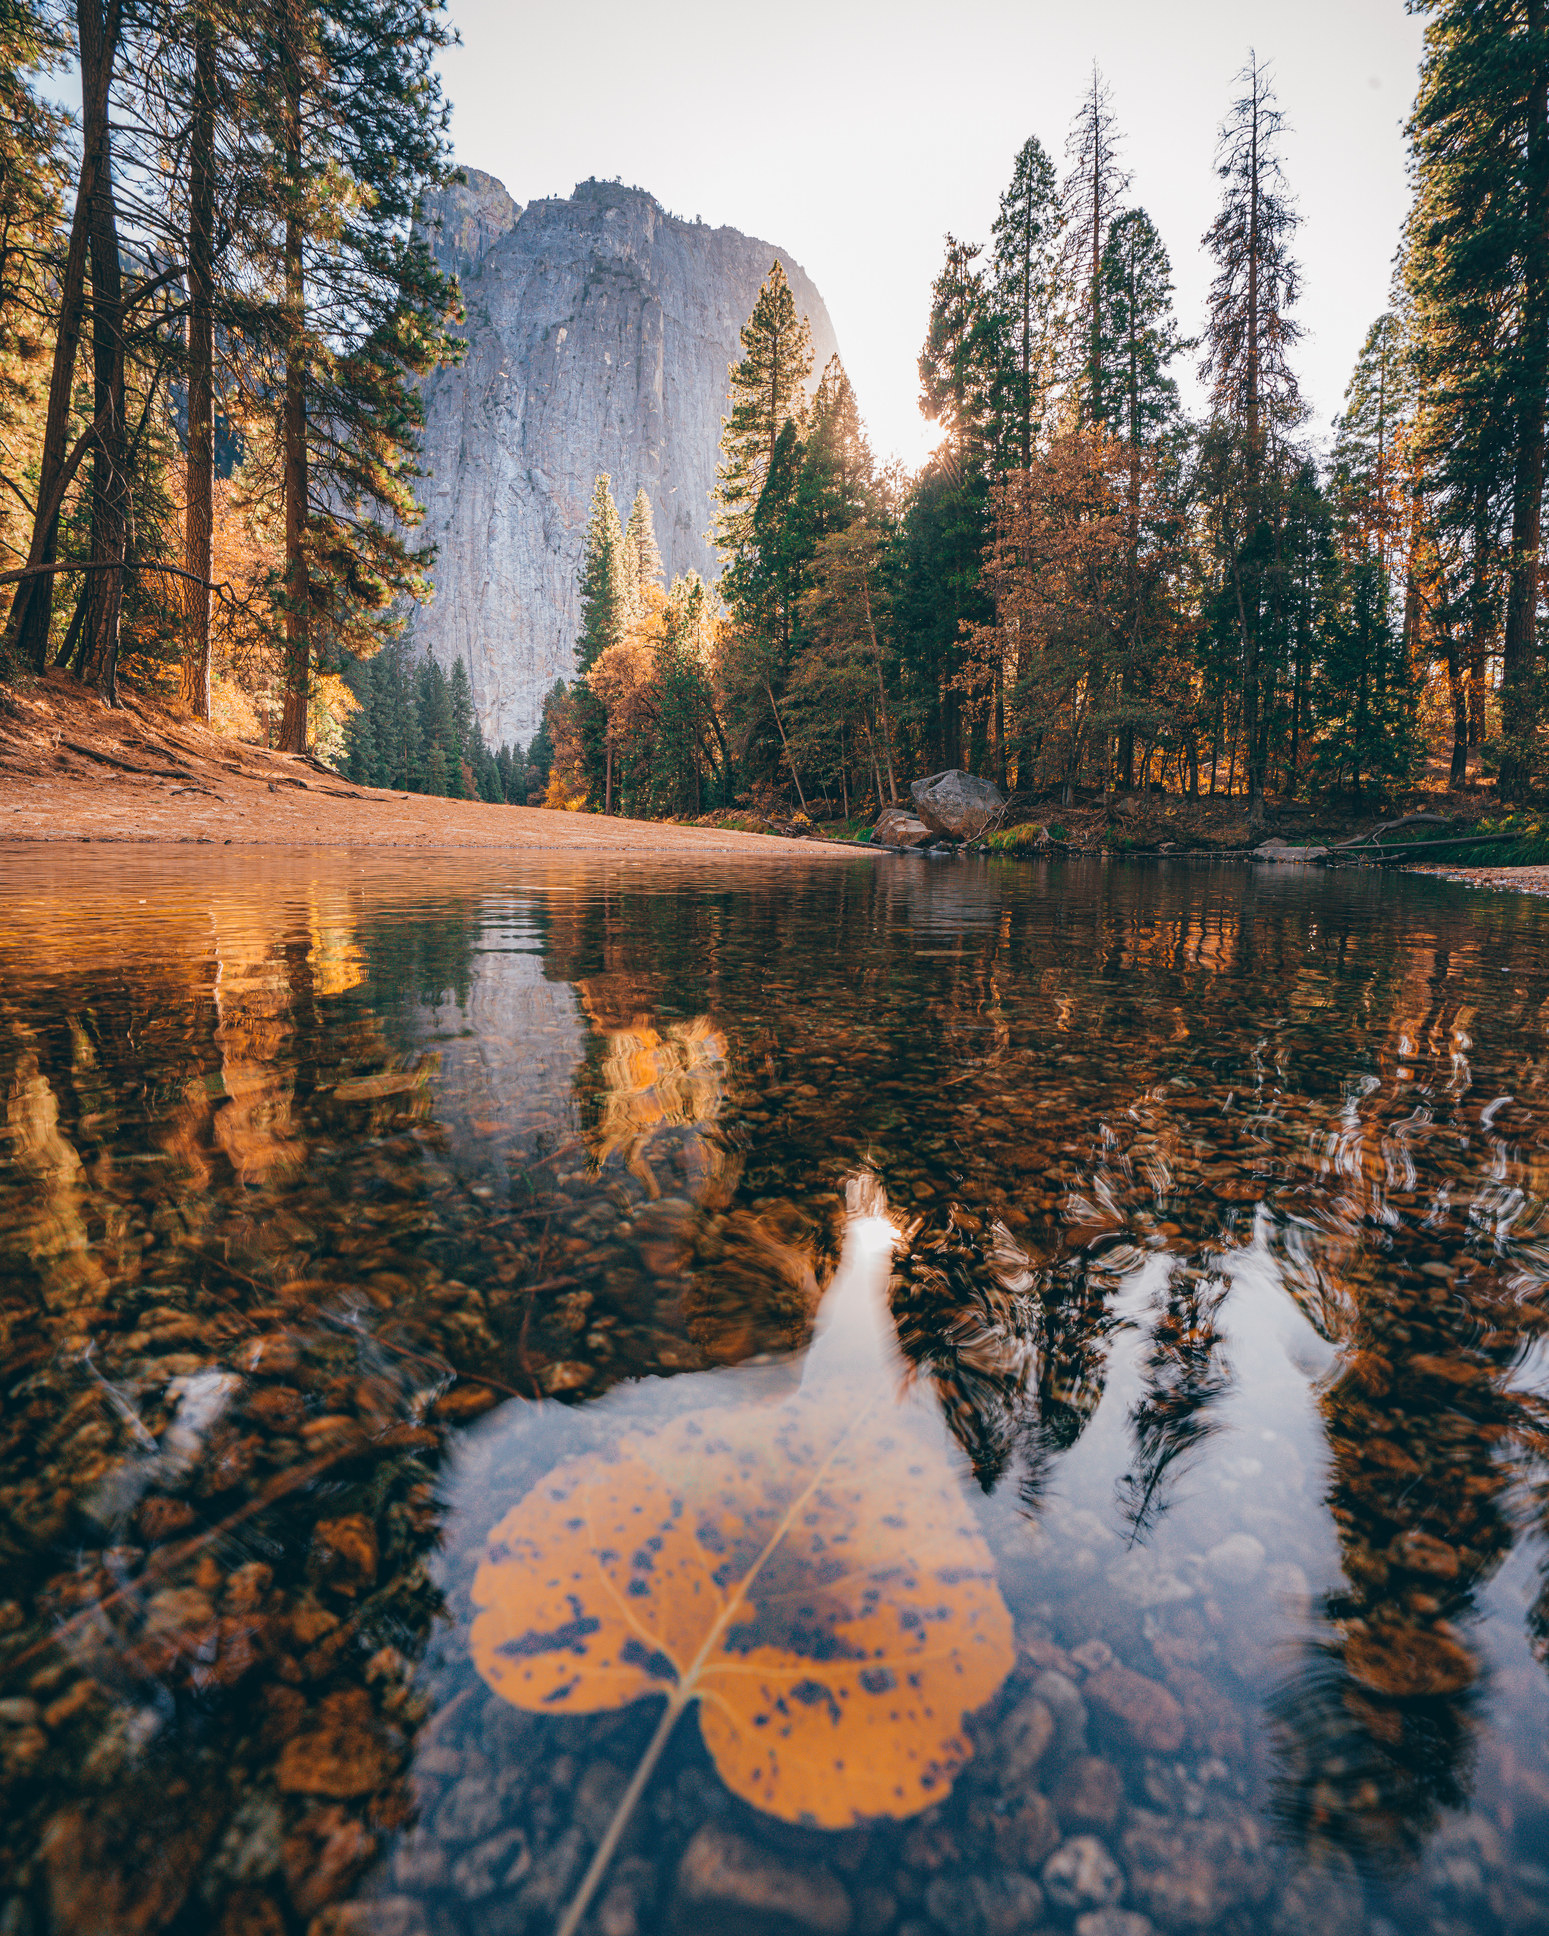 A beautiful view of Yosemite National Park.